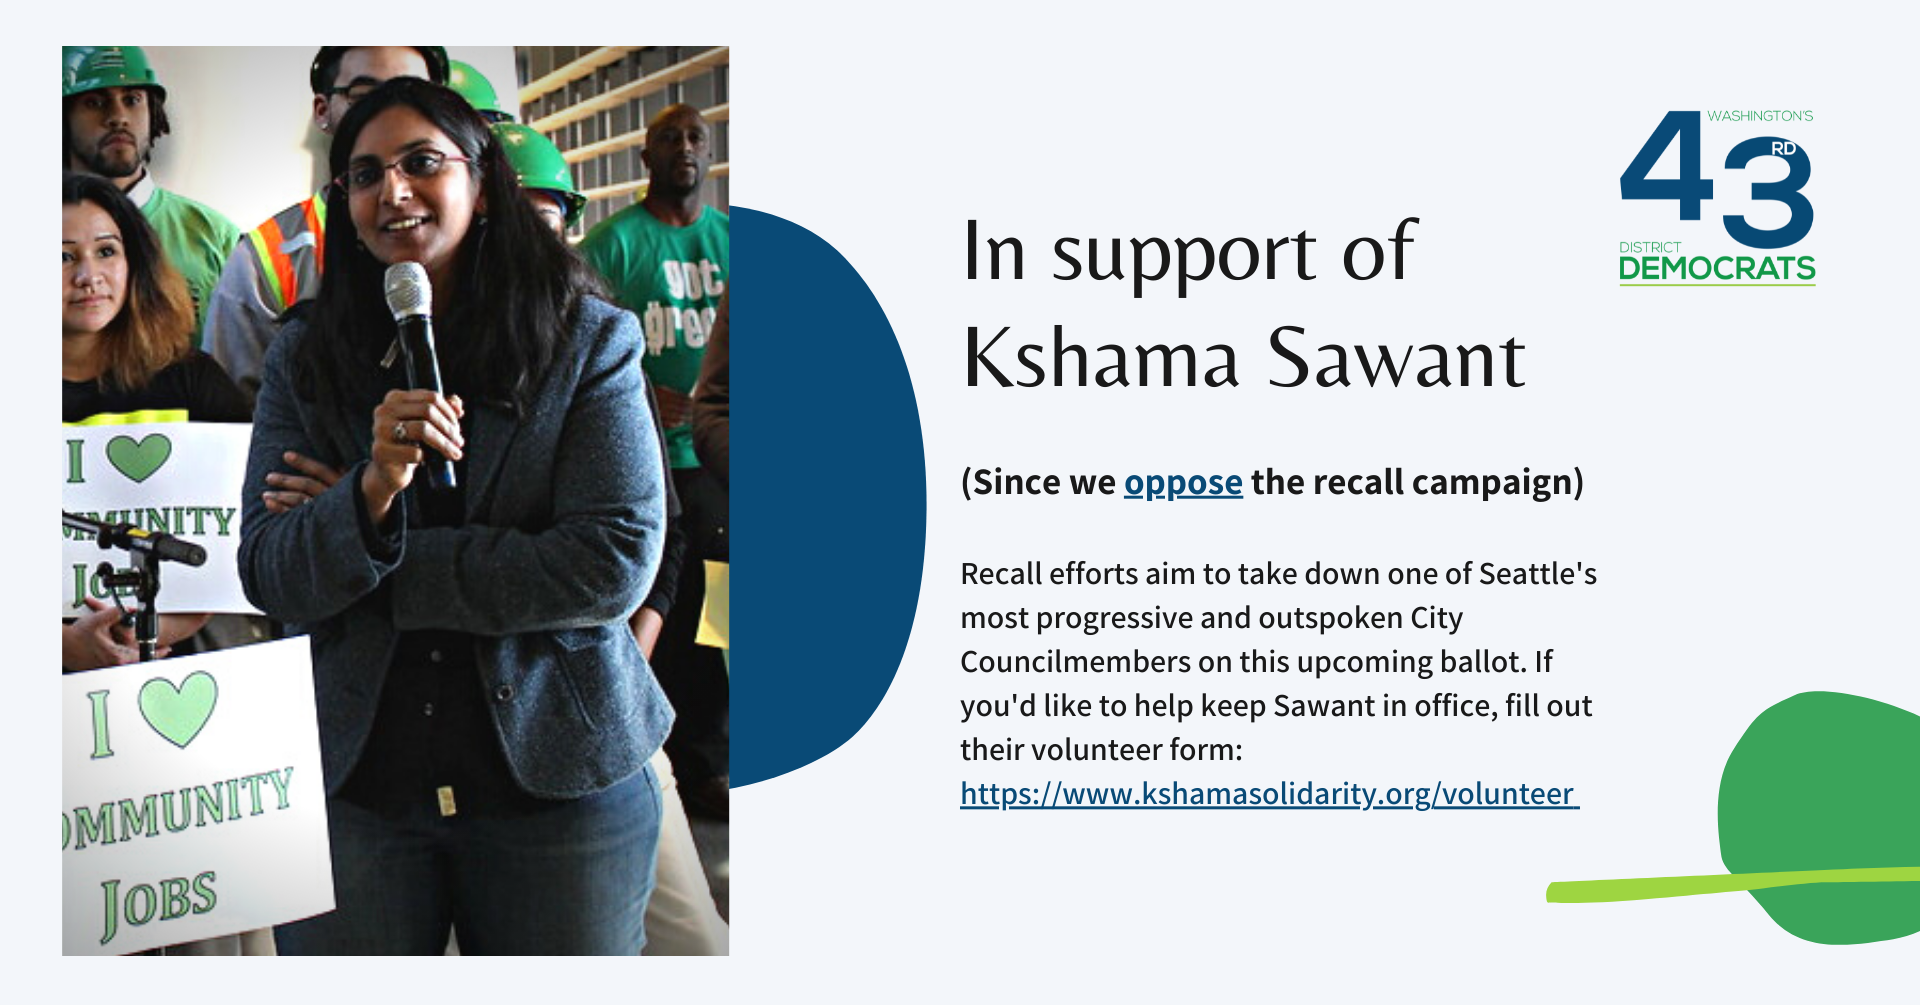 In support of Kshama Sawant